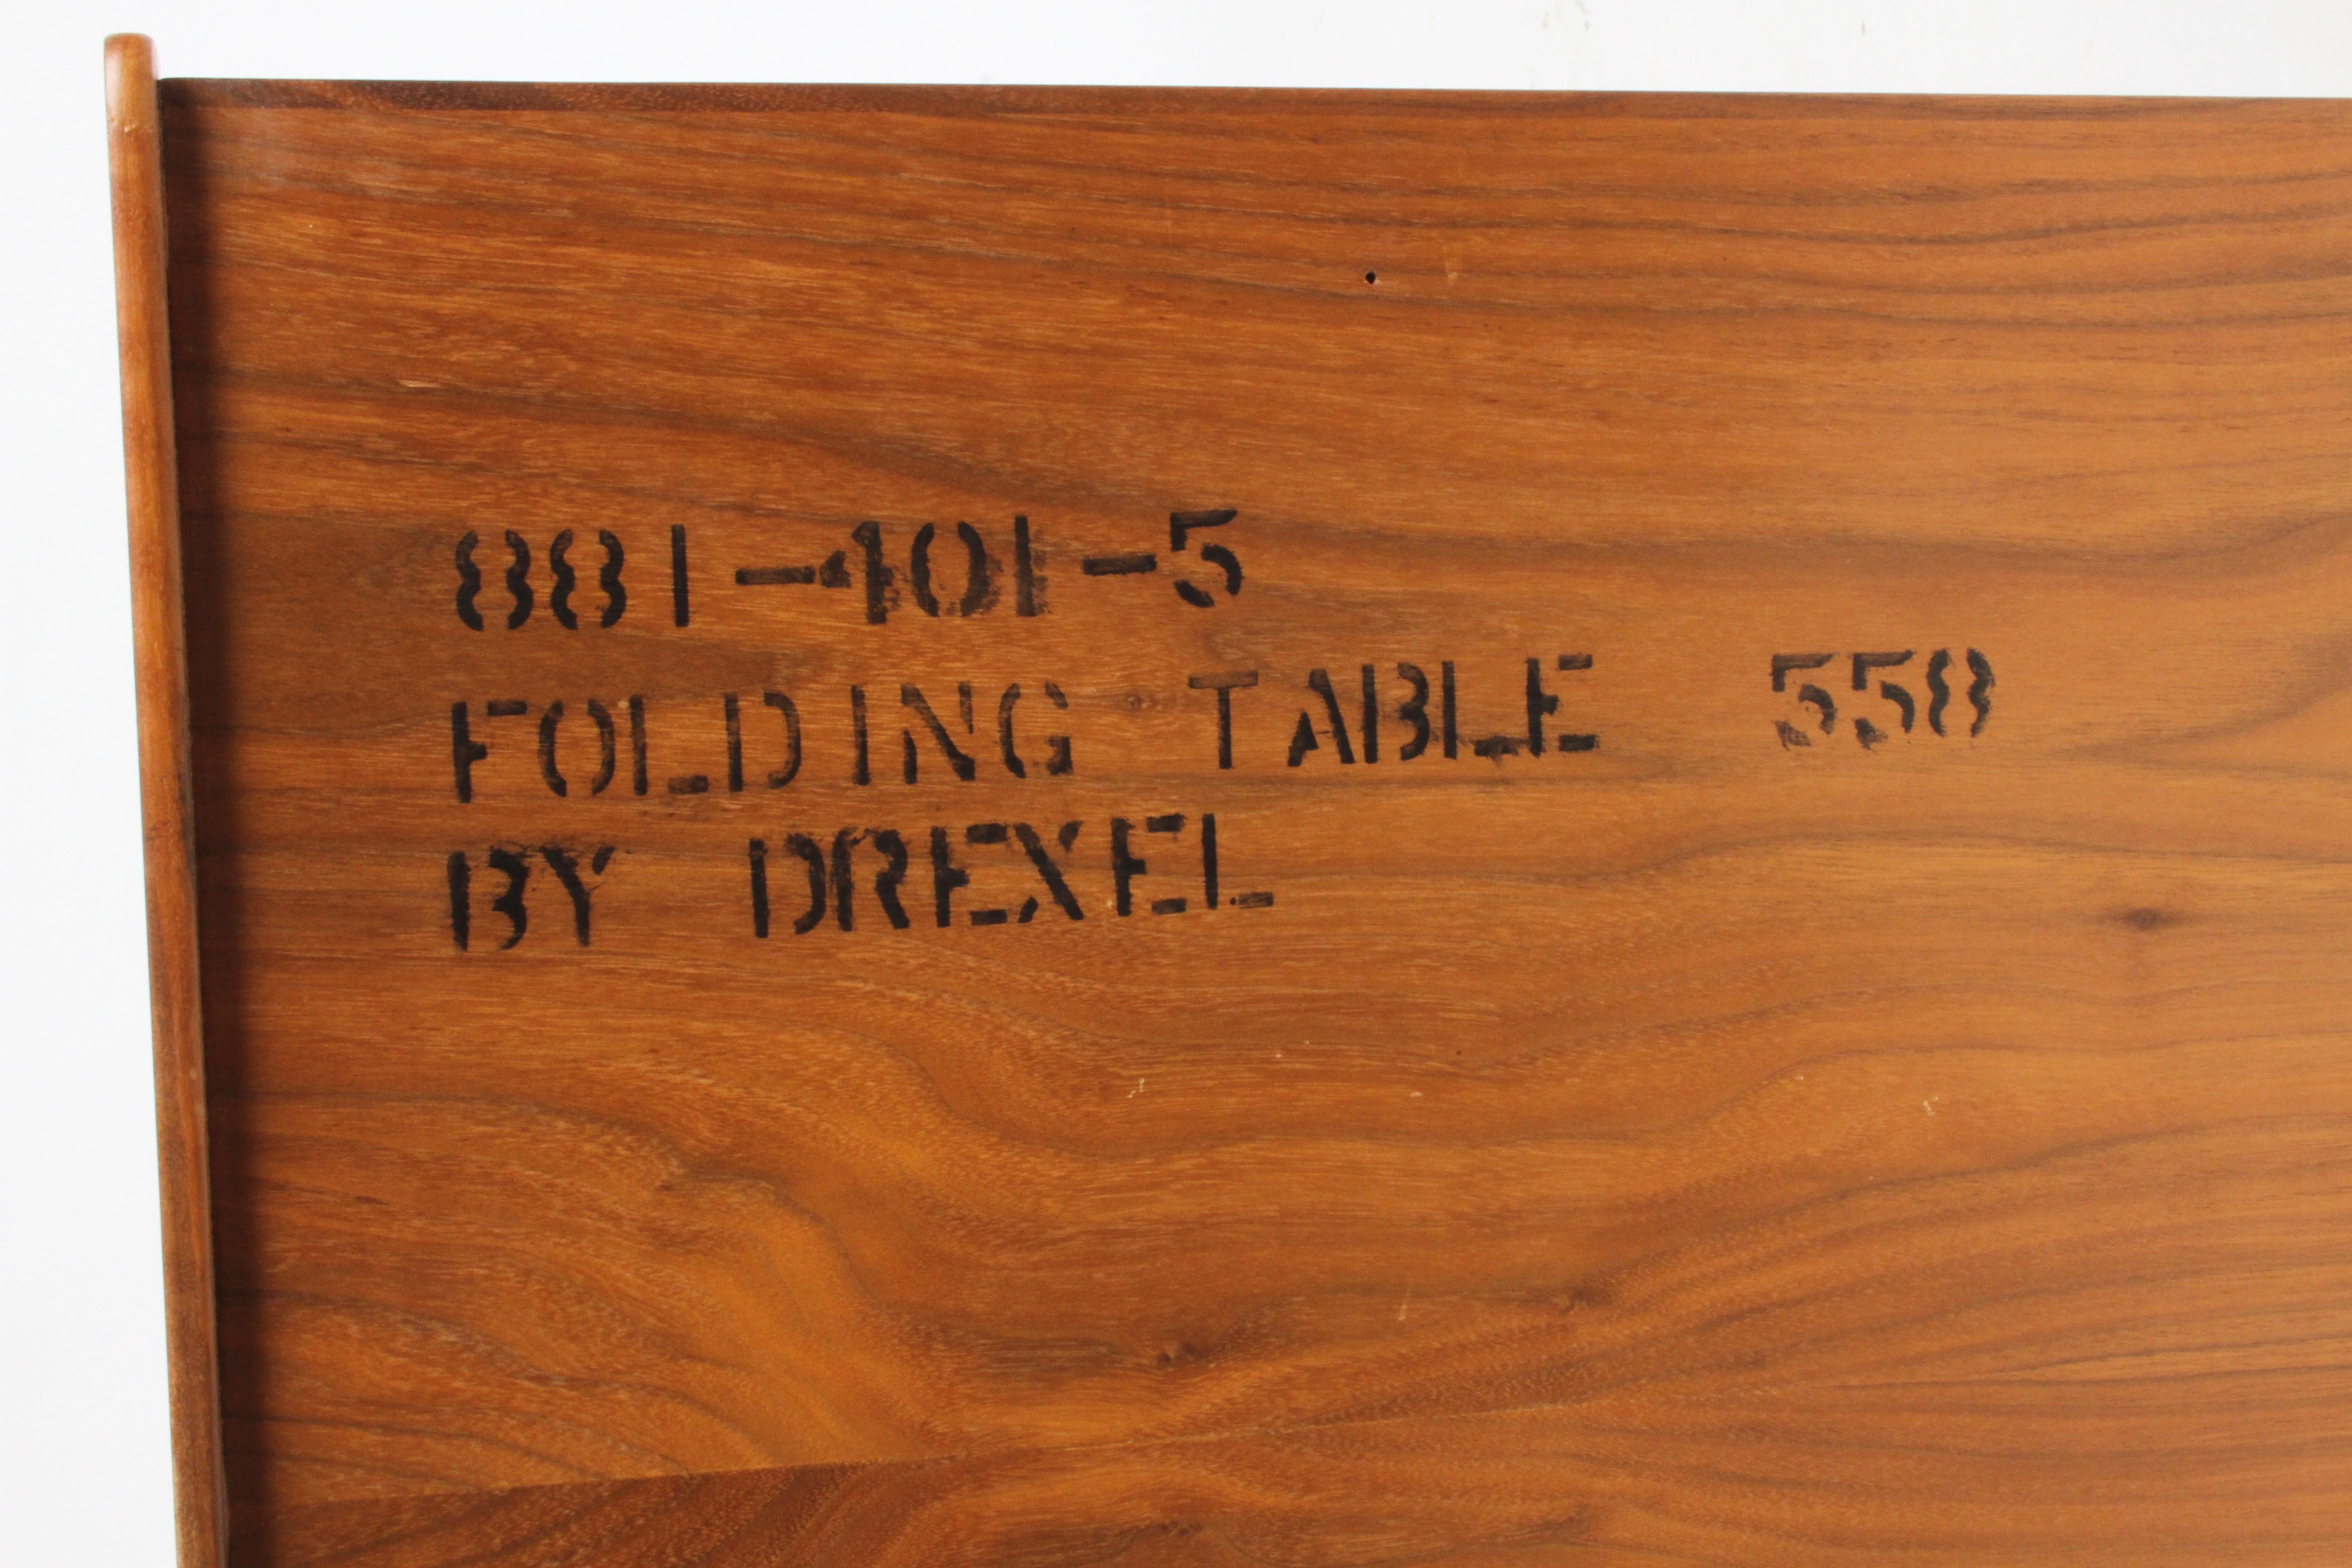 1960s Walnut Campaign Tray Table by Kipp Stewart & Stewart McDougall for Drexel  For Sale 9